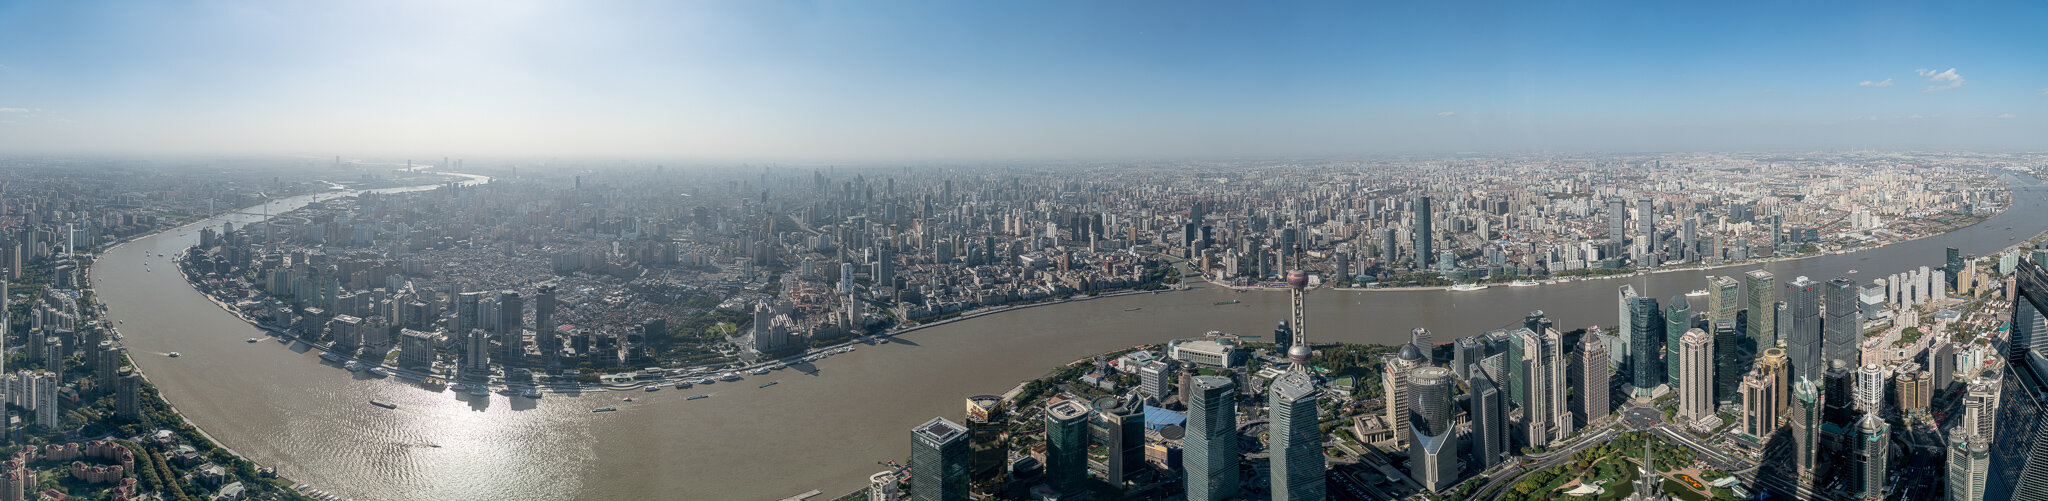 Shanghai - View from Shanghai Tower